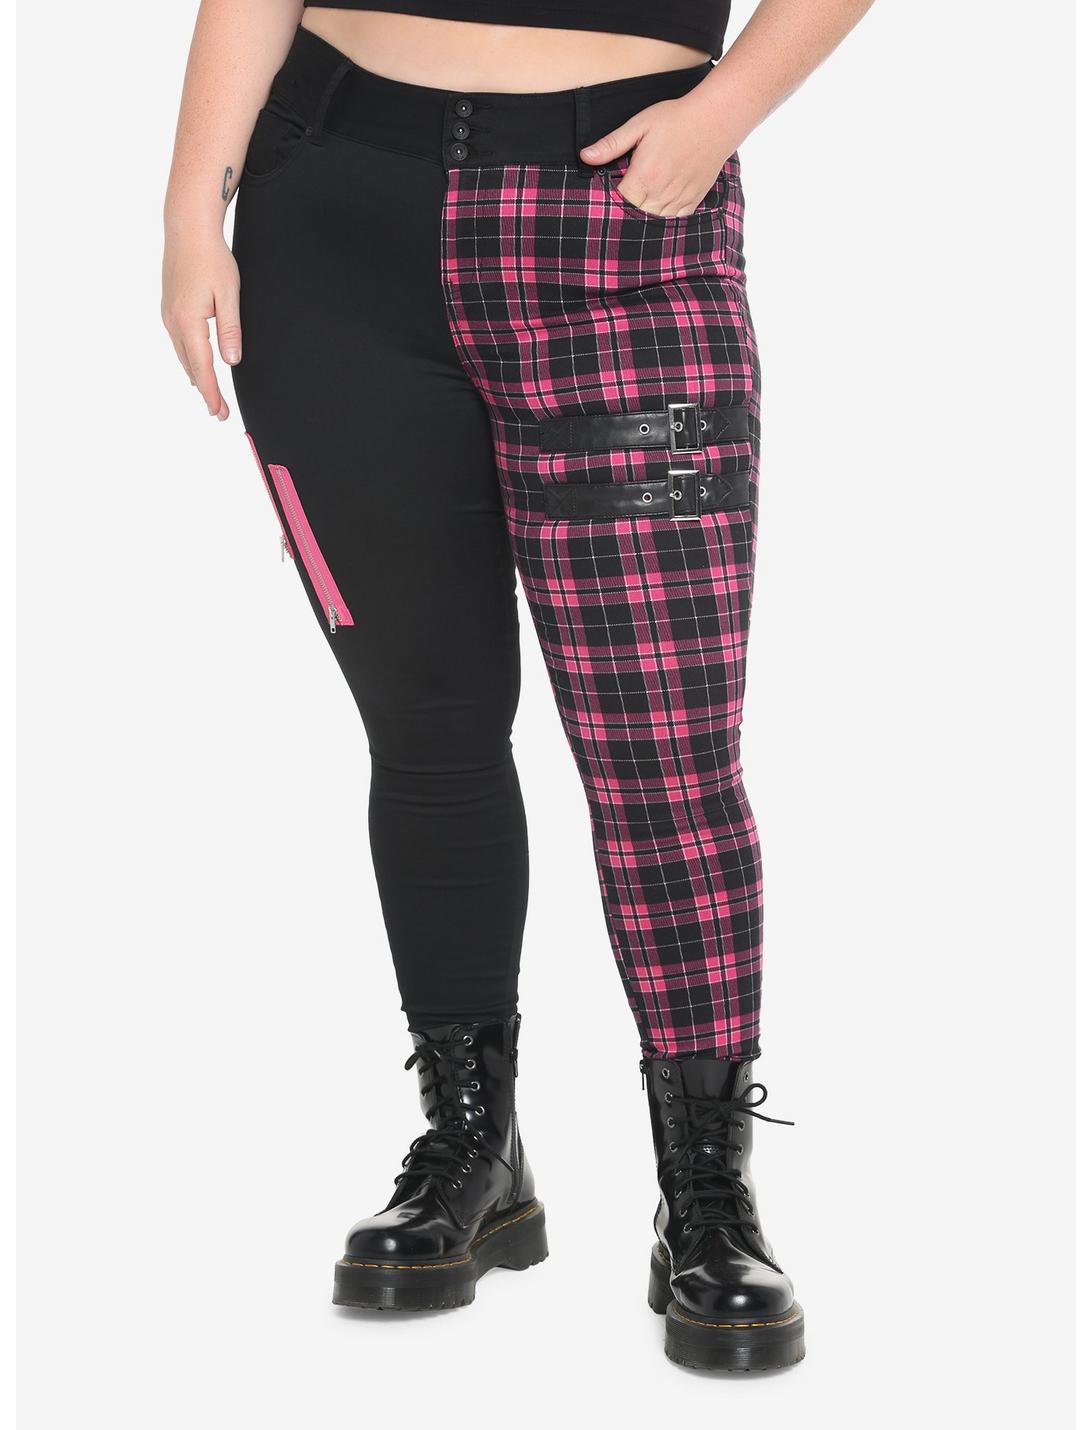 Black & Pink Plaid Split Super Skinny Jeans Plus Size, PINK, hi-res